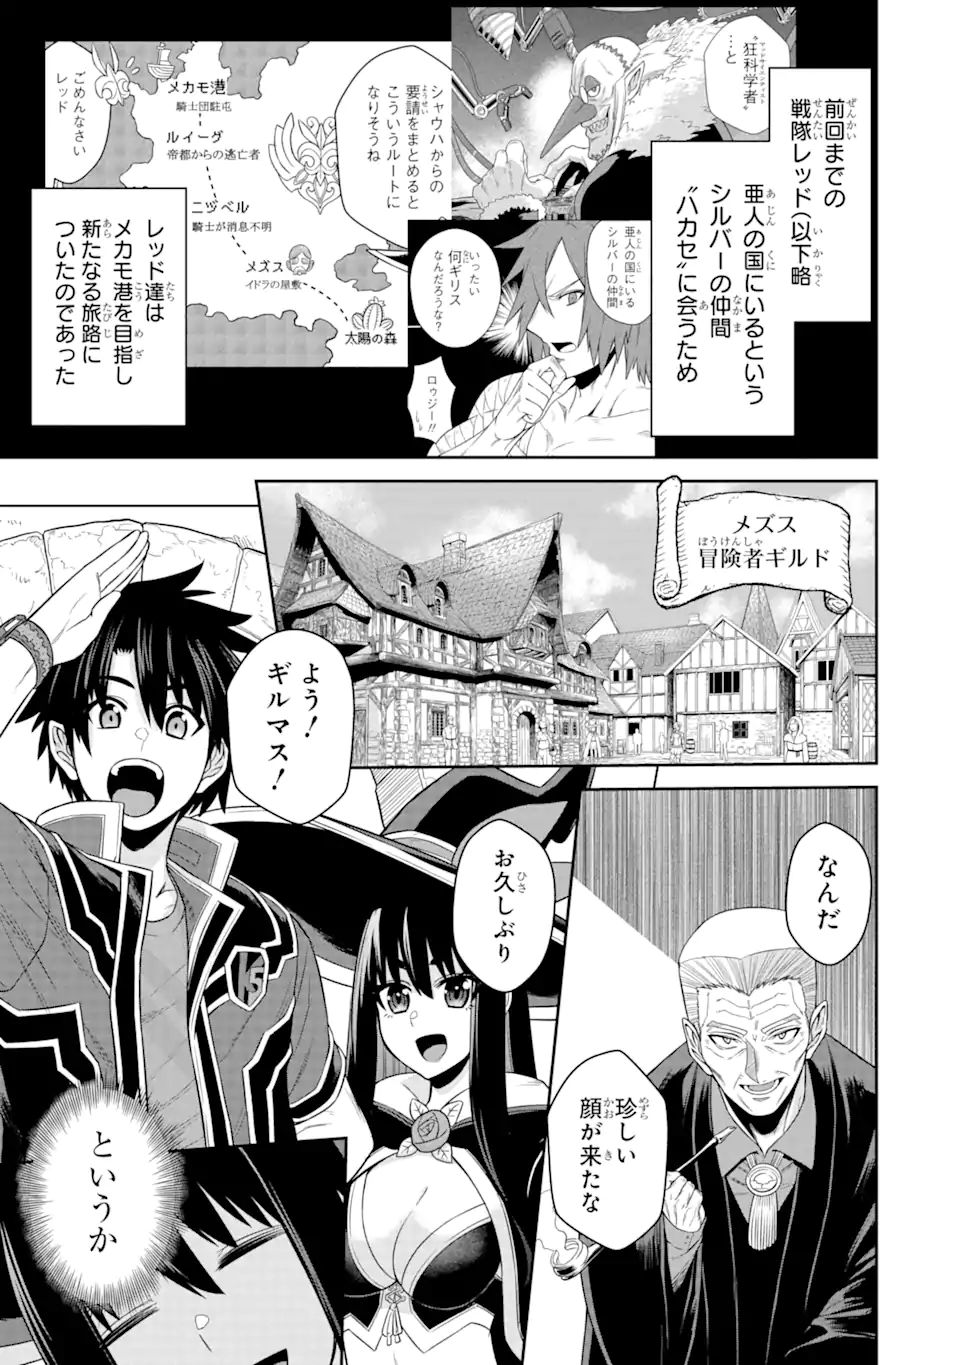 Sentai Red Isekai de Boukensha ni Naru - Chapter 17.1 - Page 1